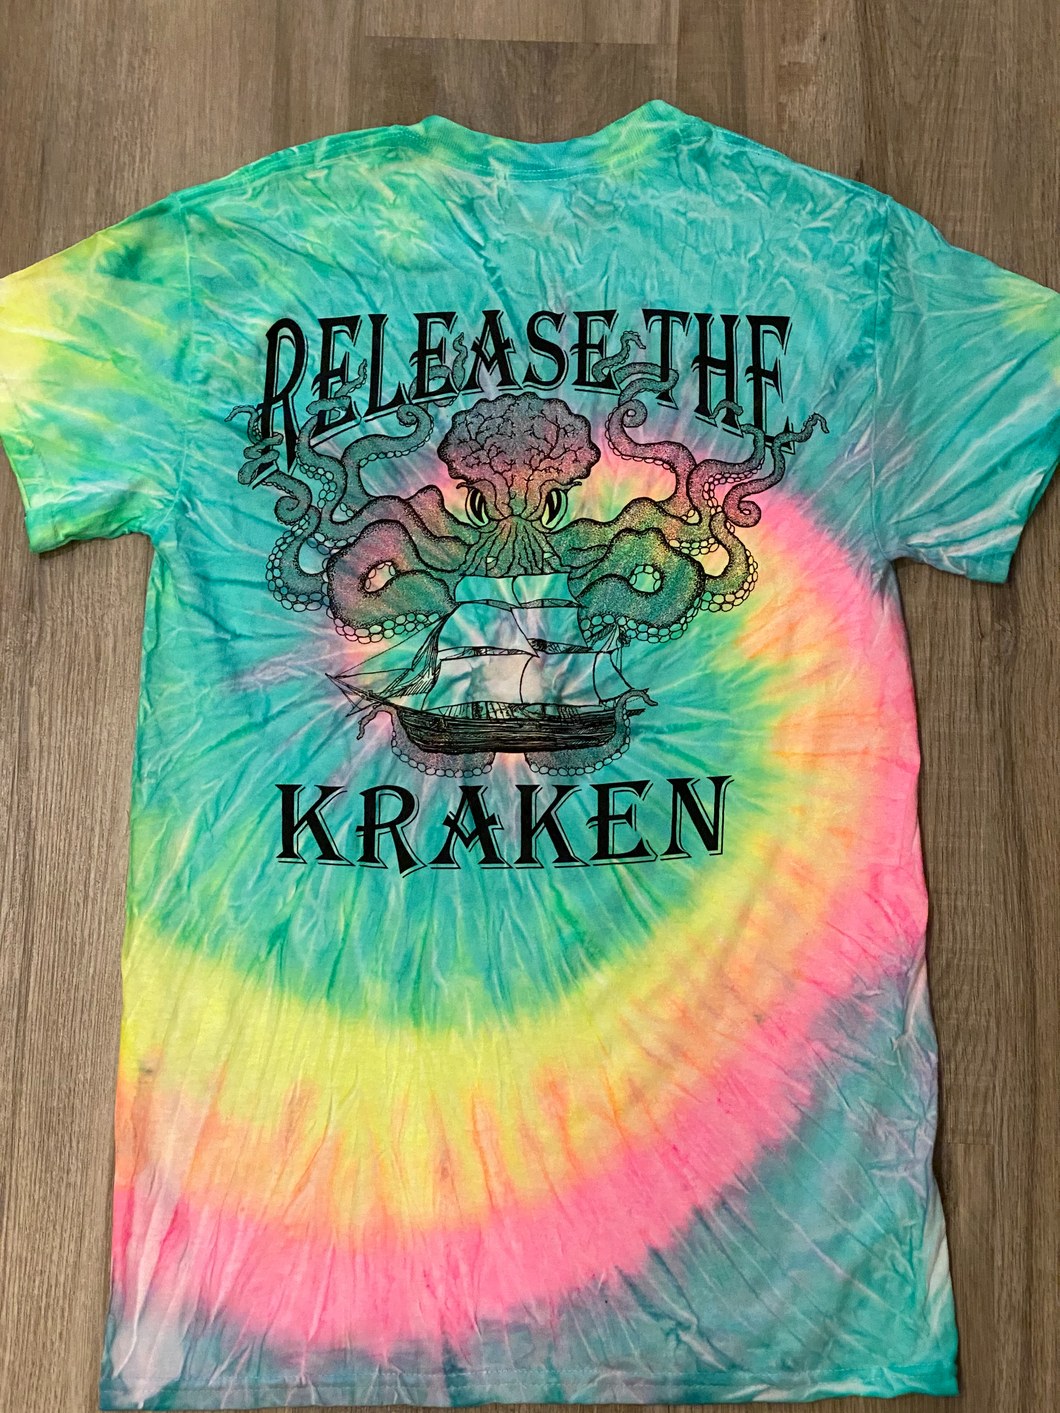 Release The Kraken Tie-Dye Tee